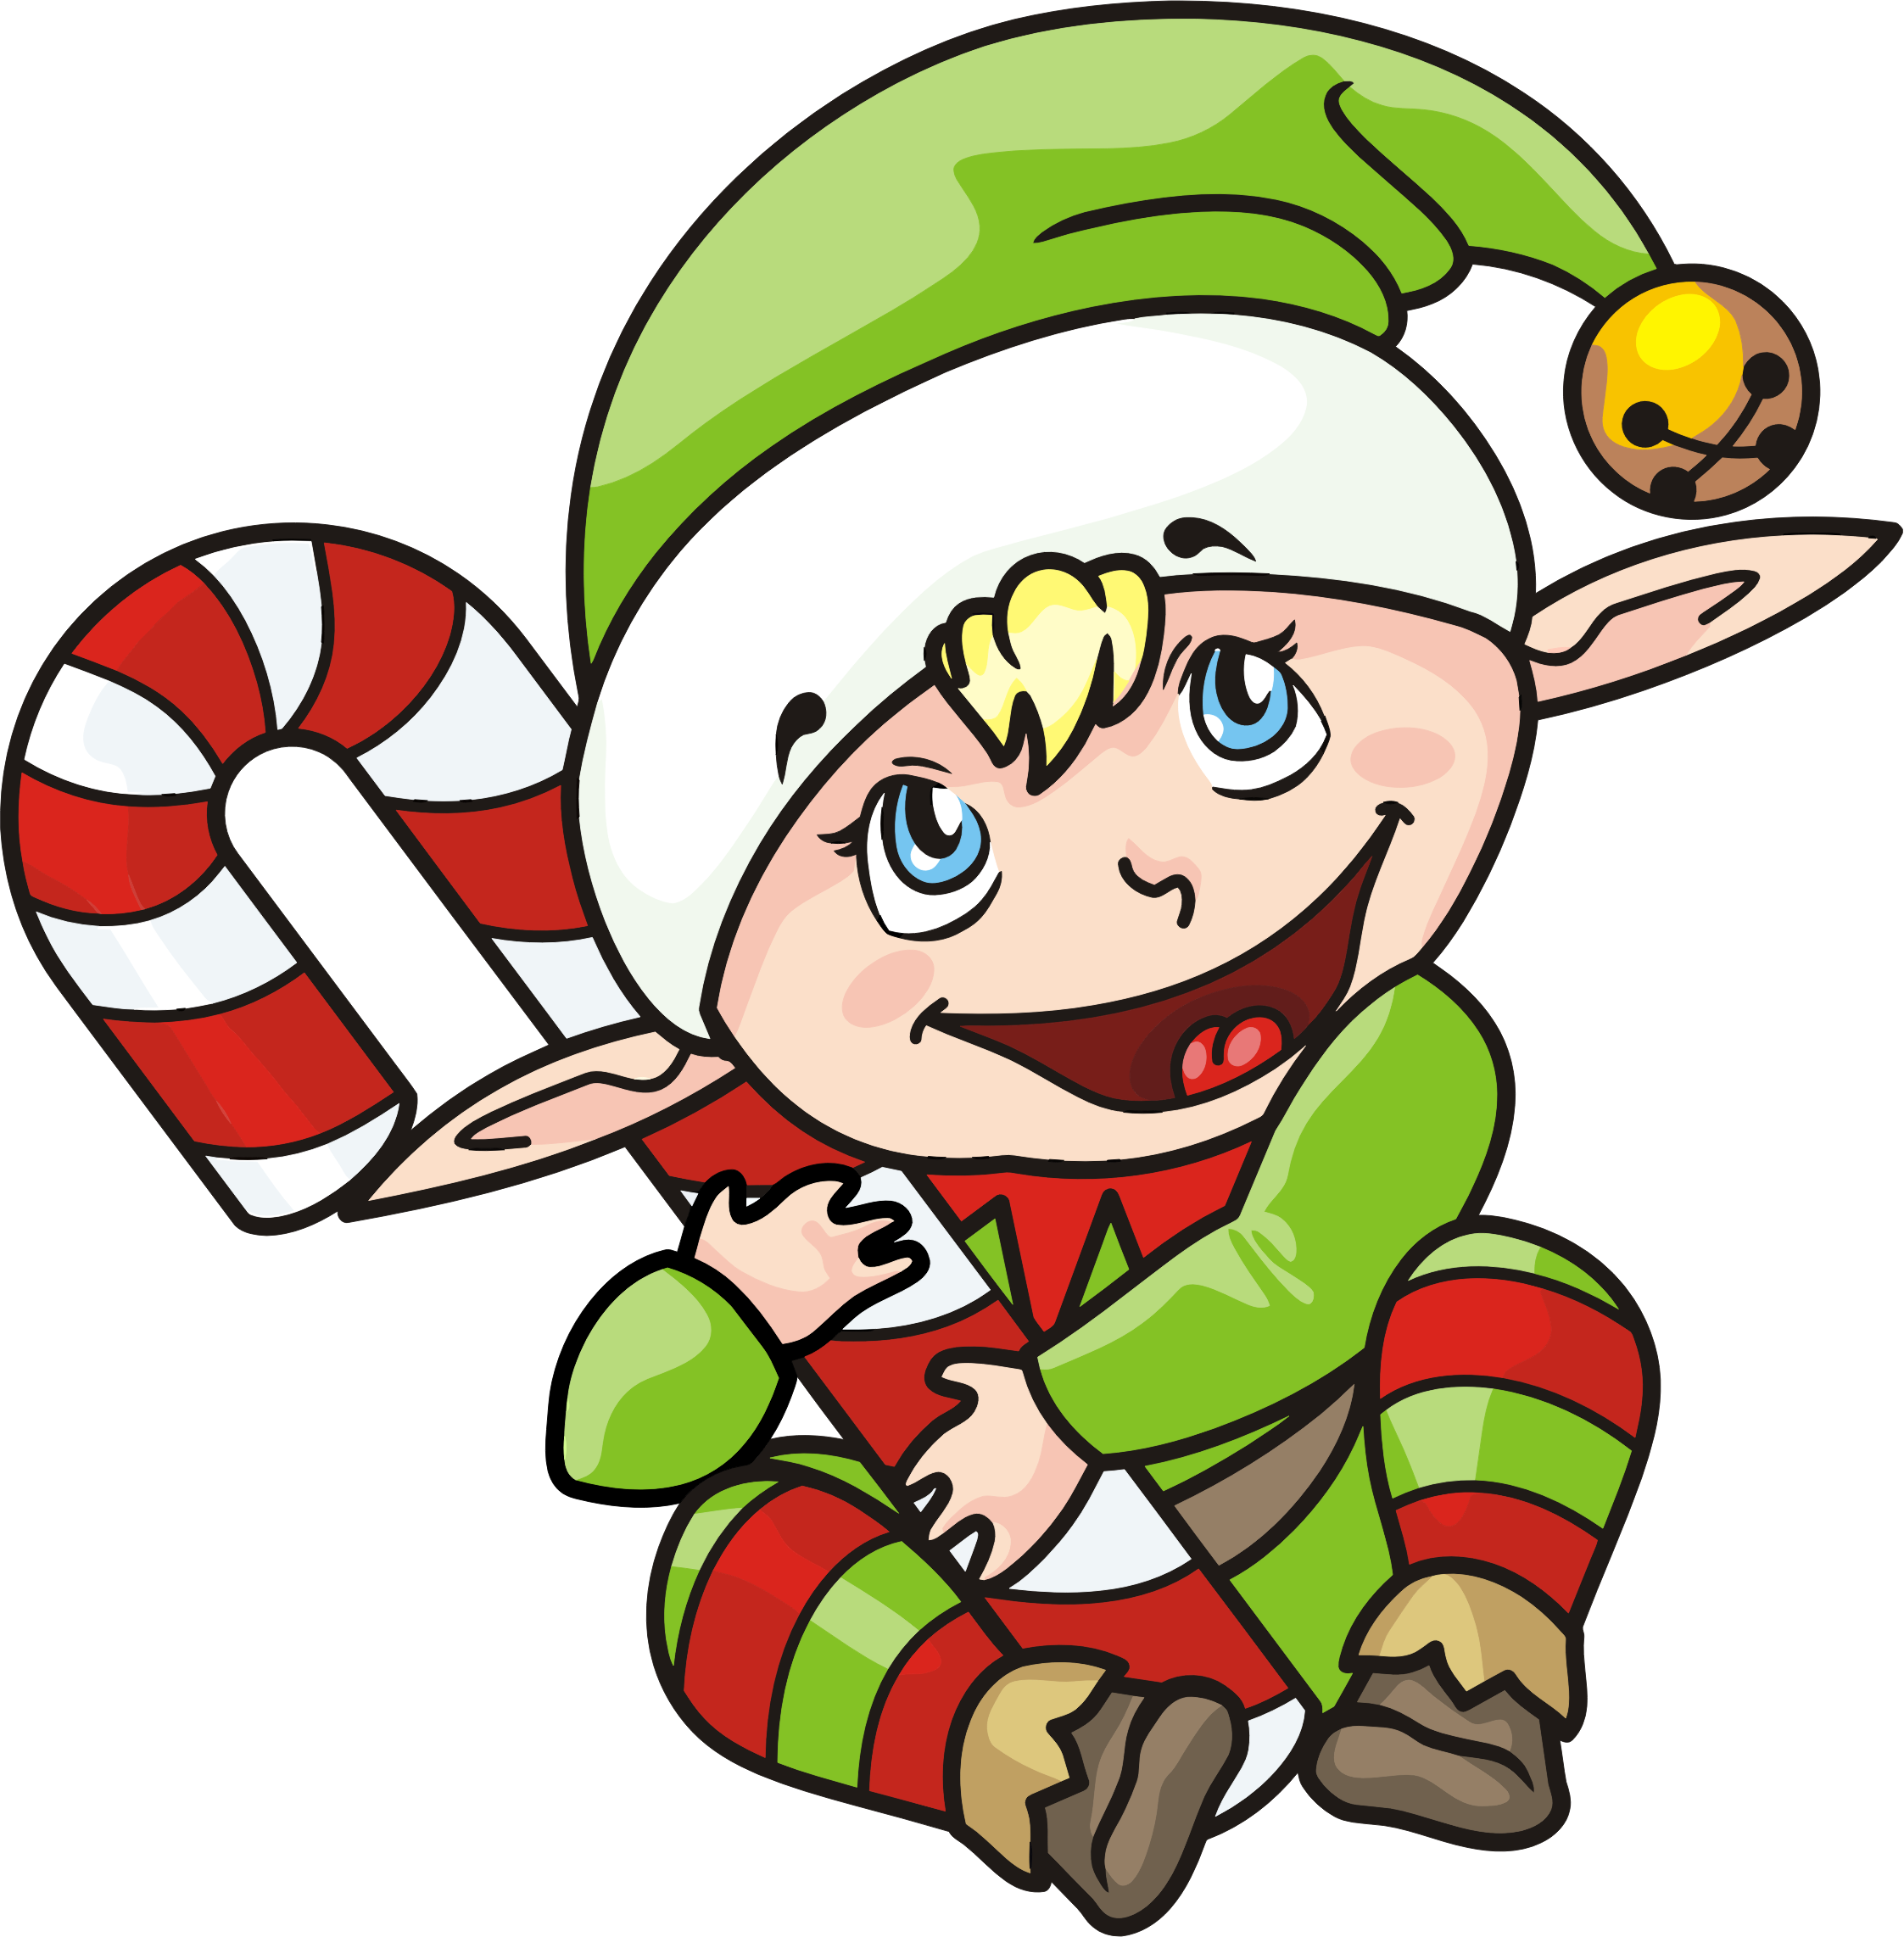 happy clipart elf